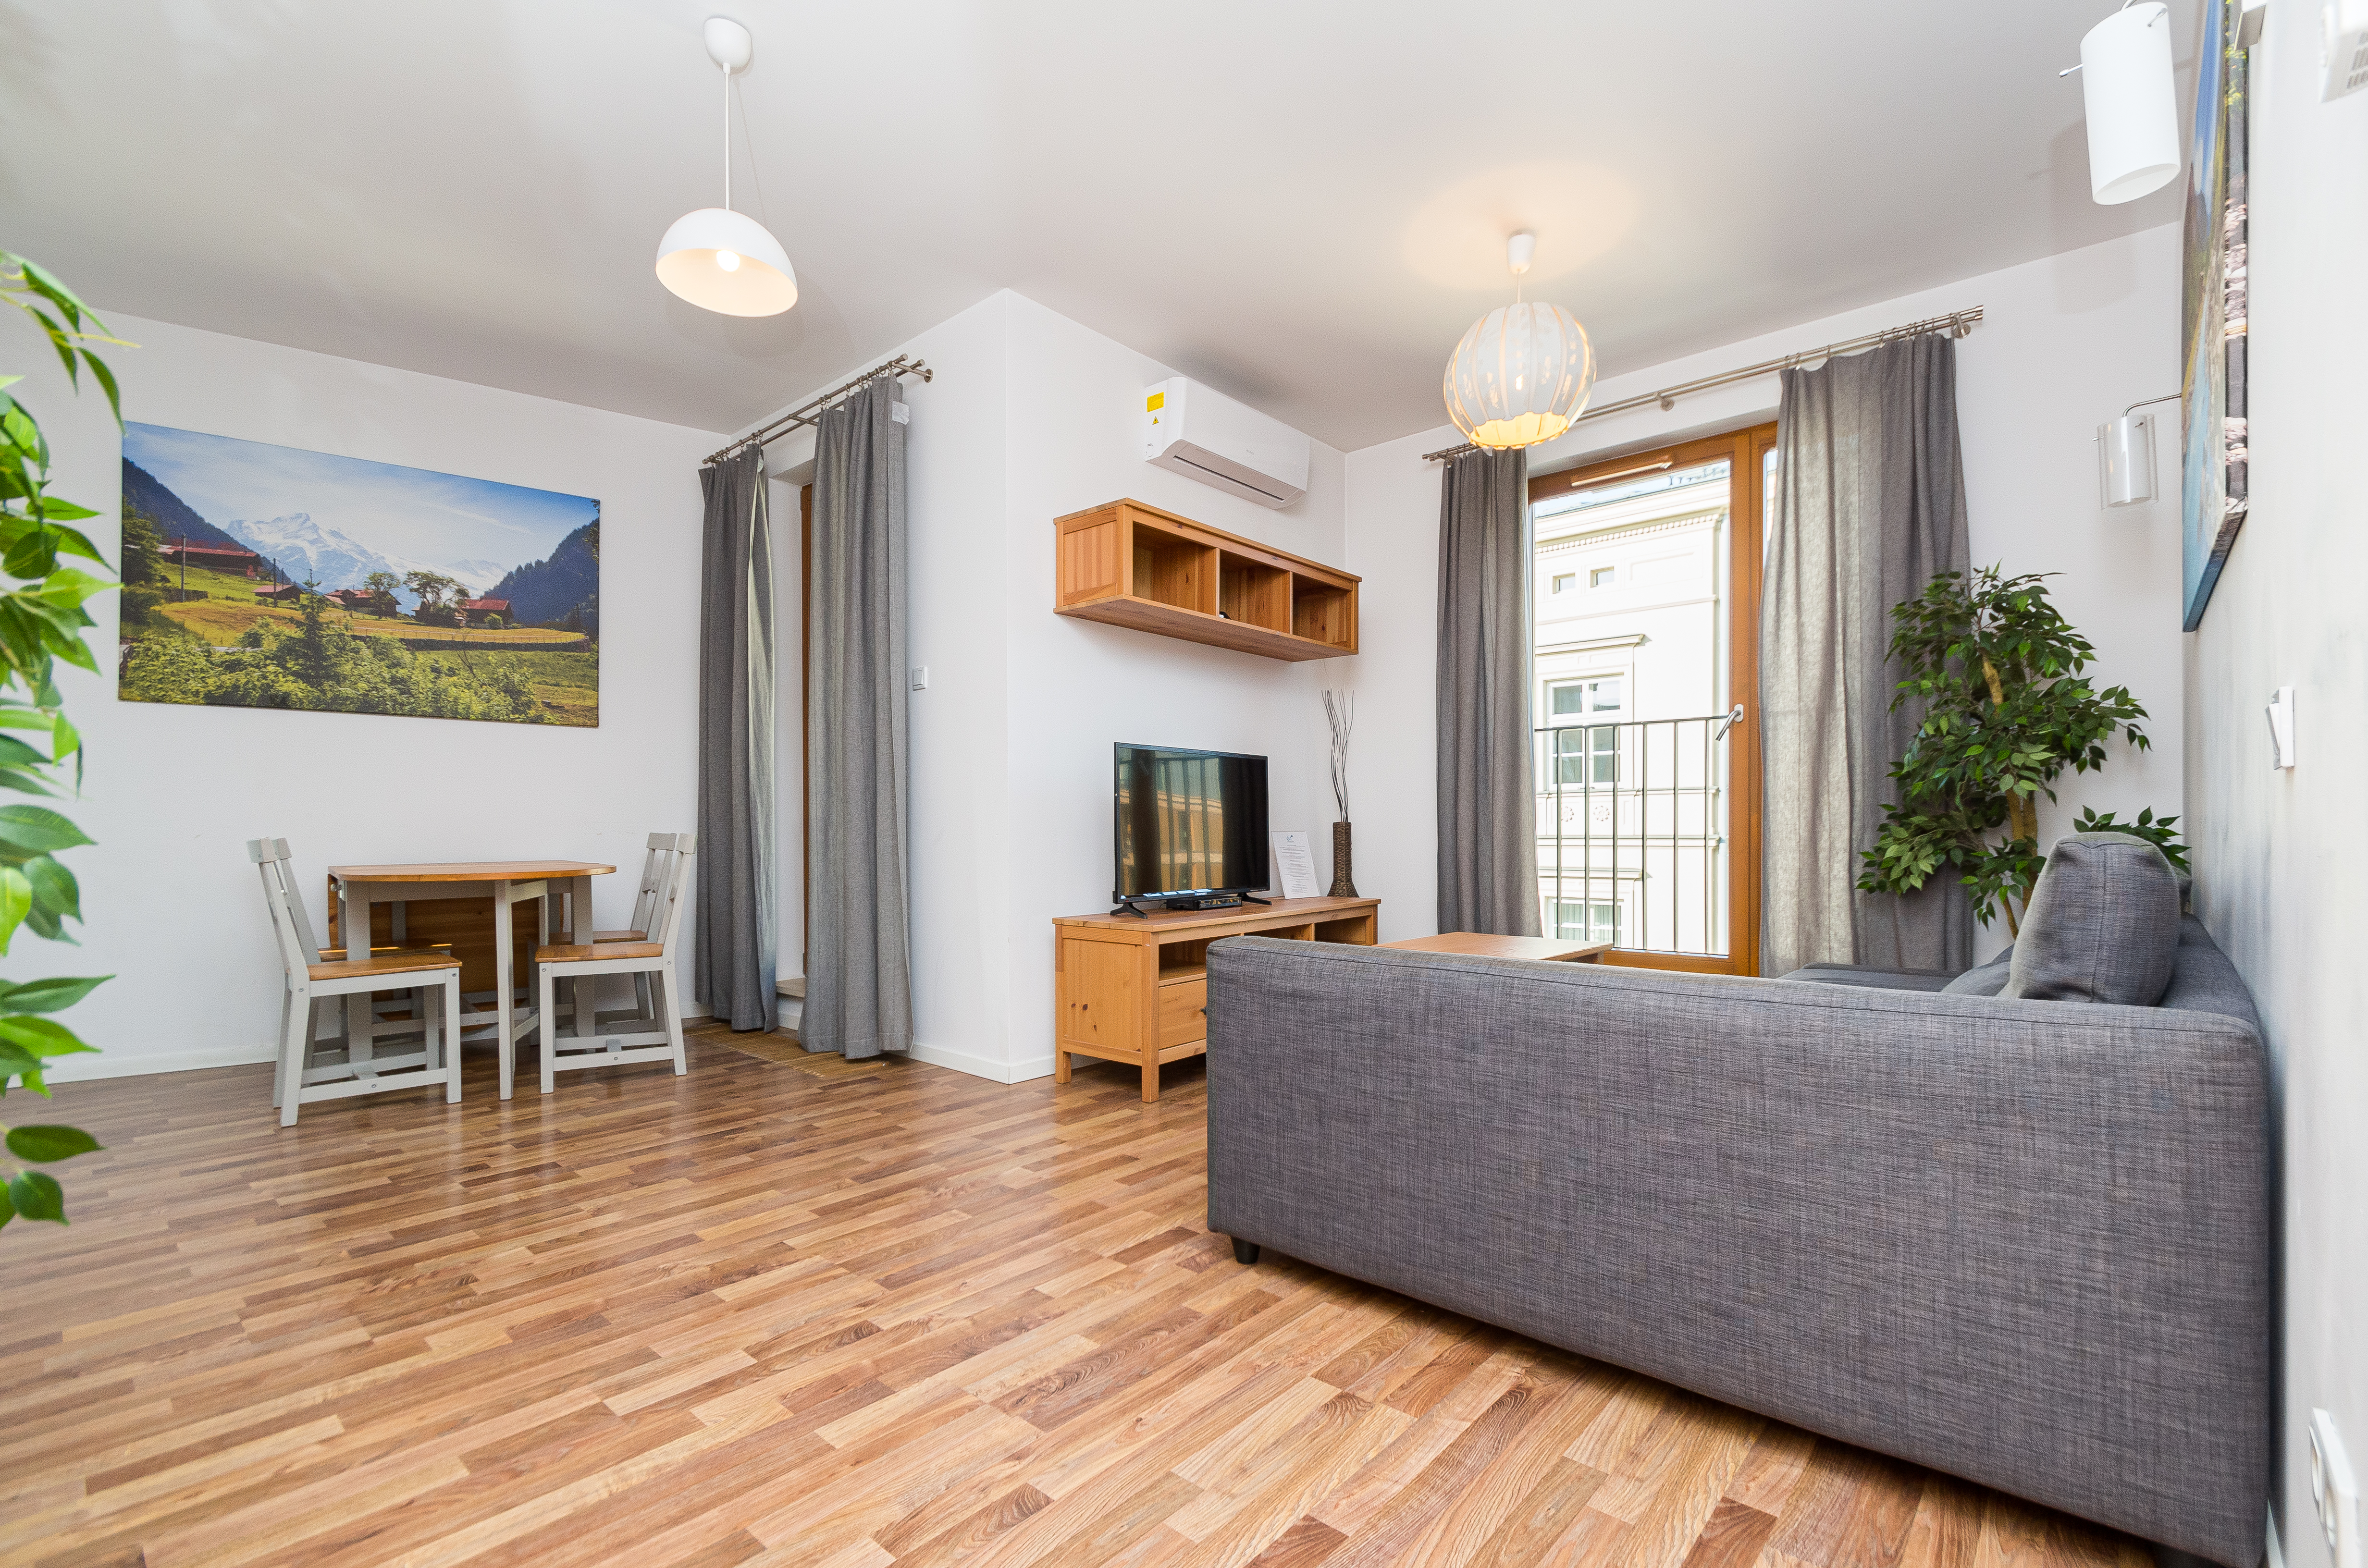 Menorca (Metropolitan C) Apartment in Browar Lubicz in Krakow Old Town, Two bedroom apartment - LANDMARK APARTMENTS